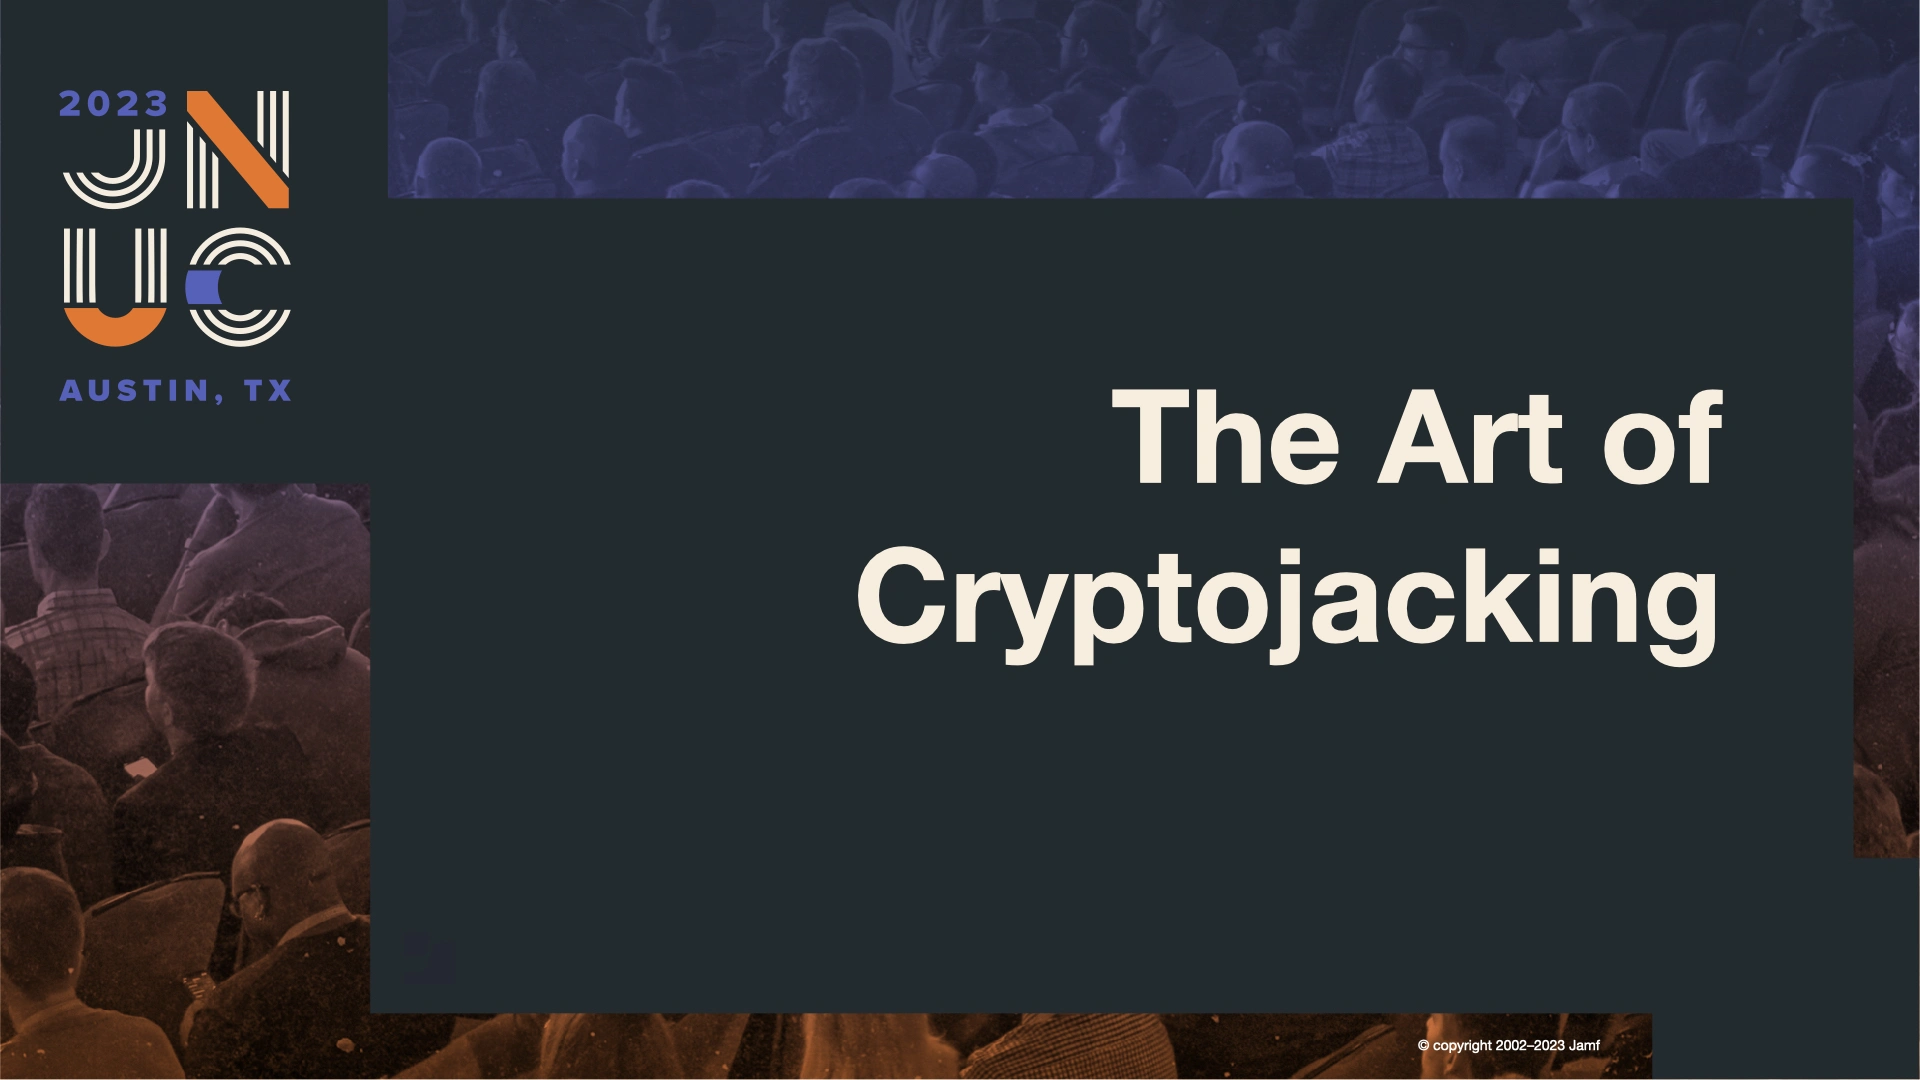 The Art of Cryptojacking